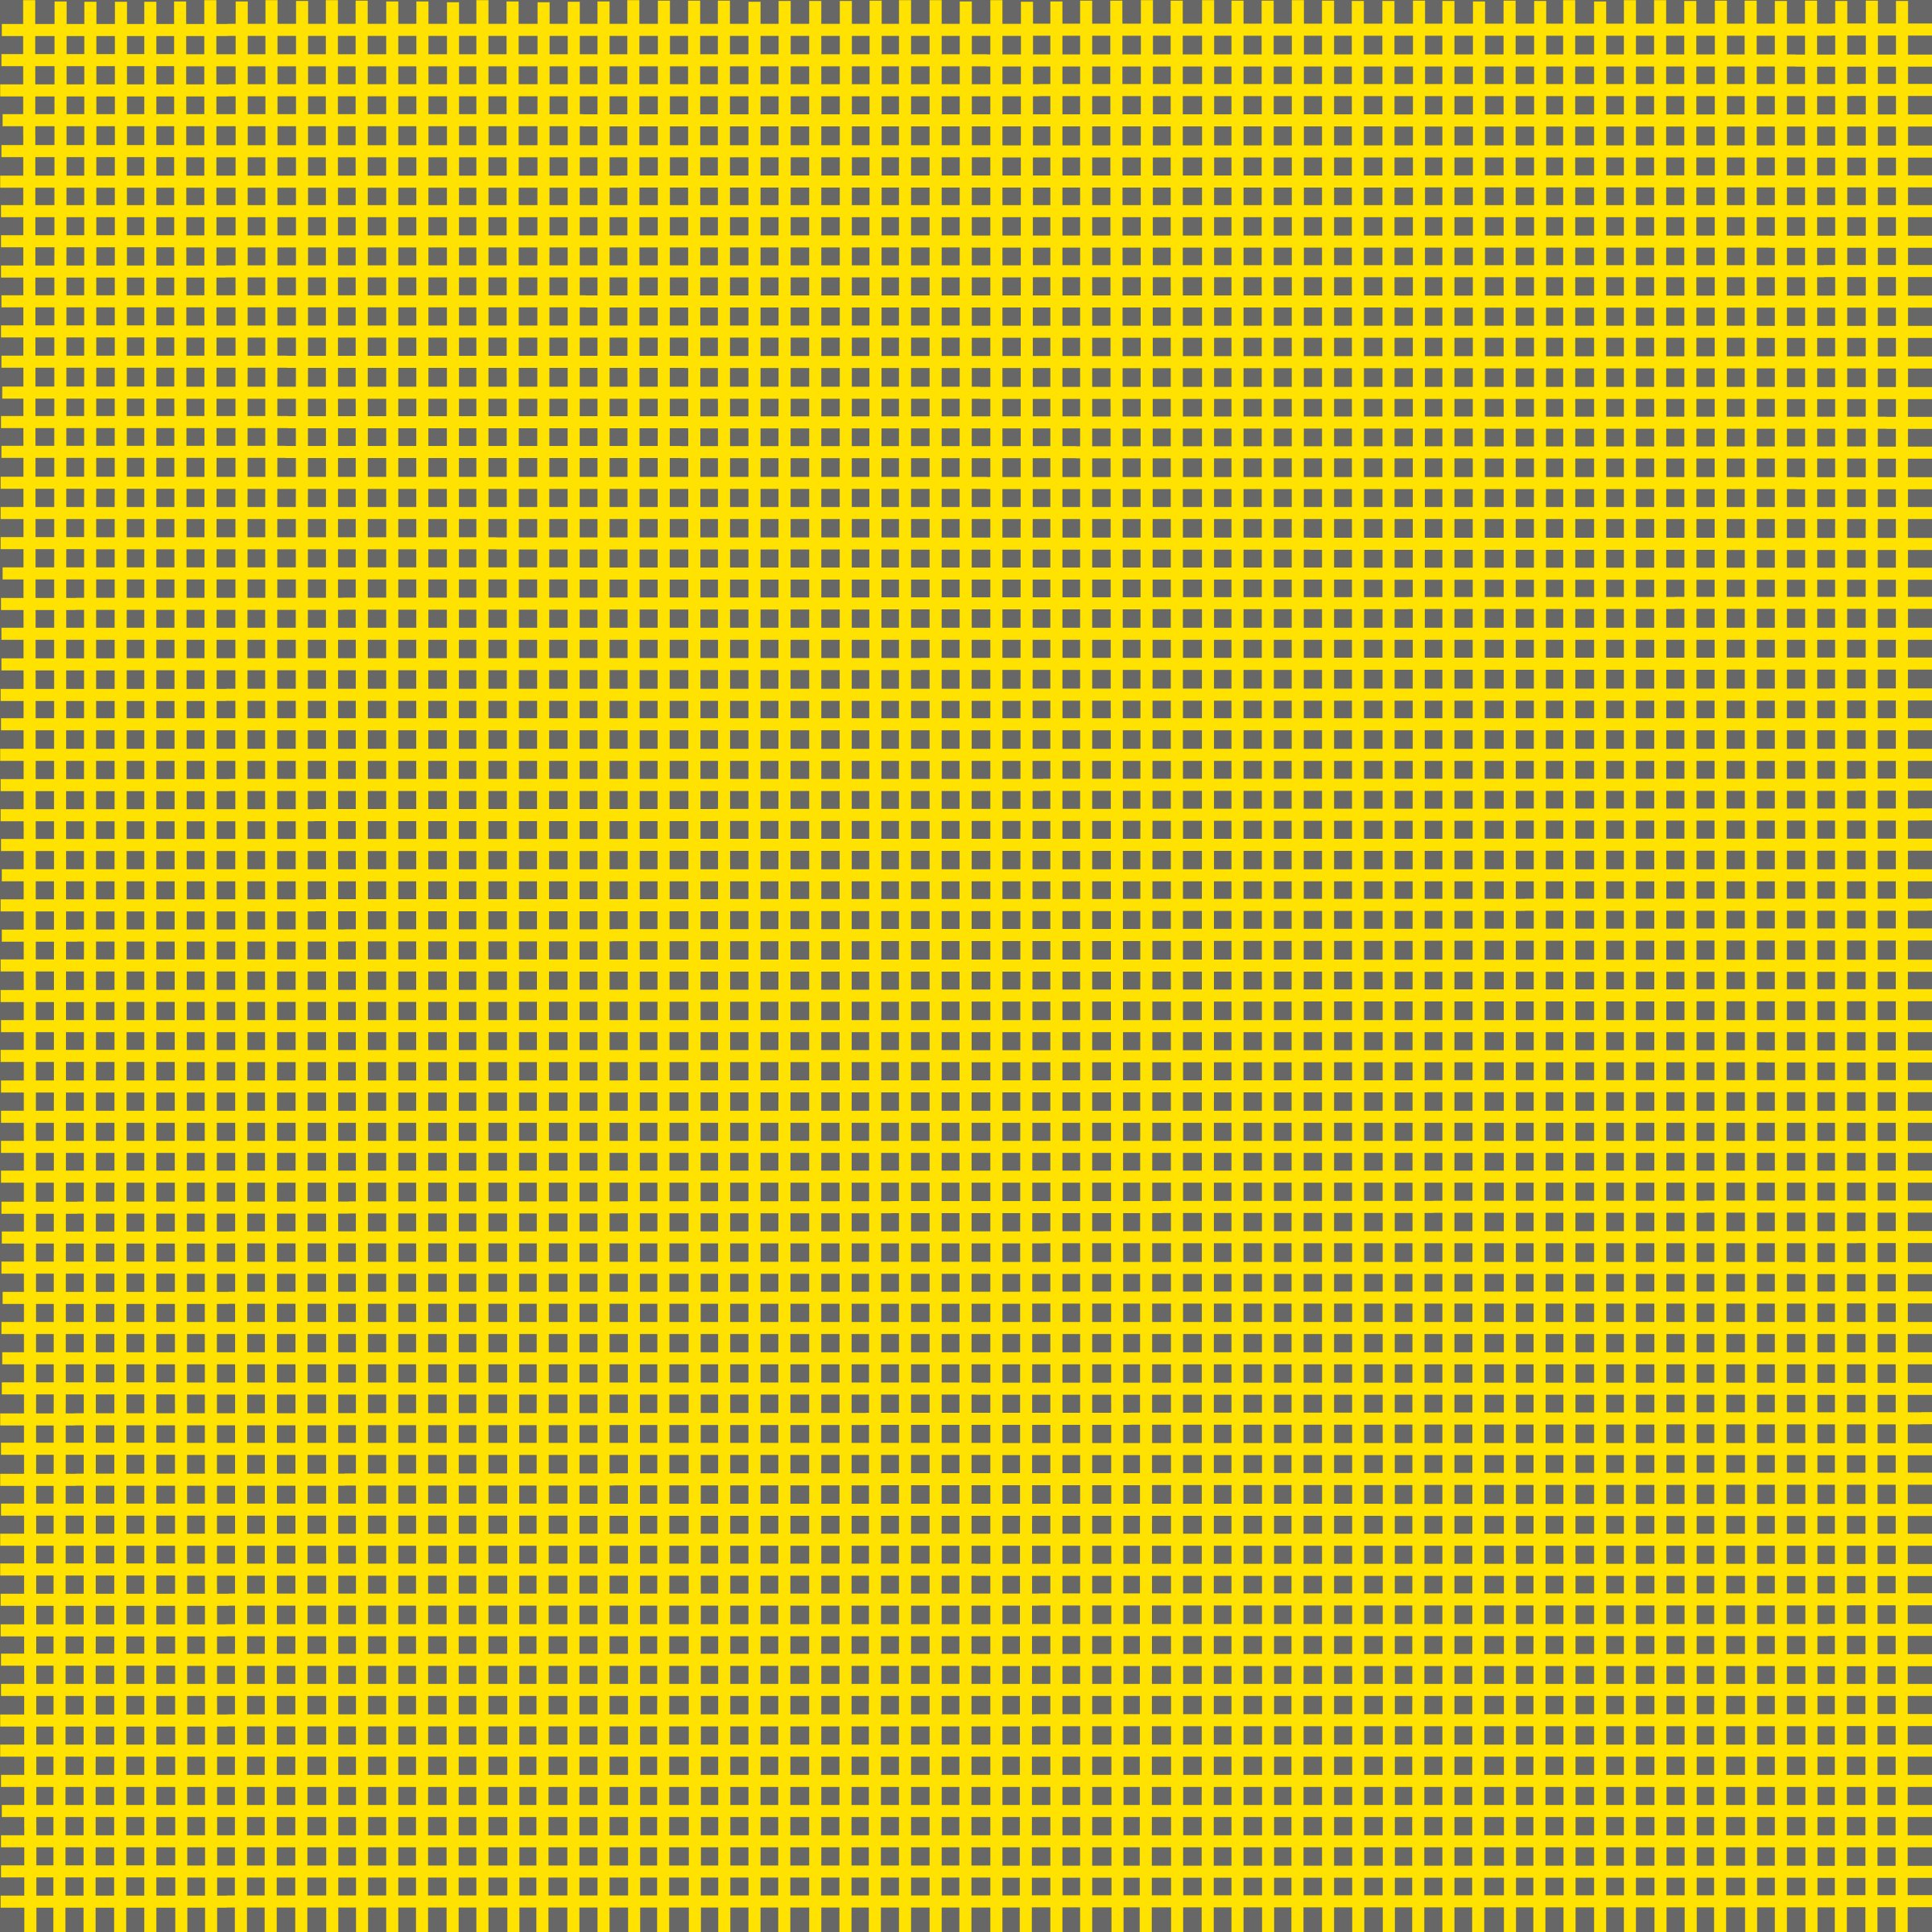 small grid 10 (cadmium yellow).jpg